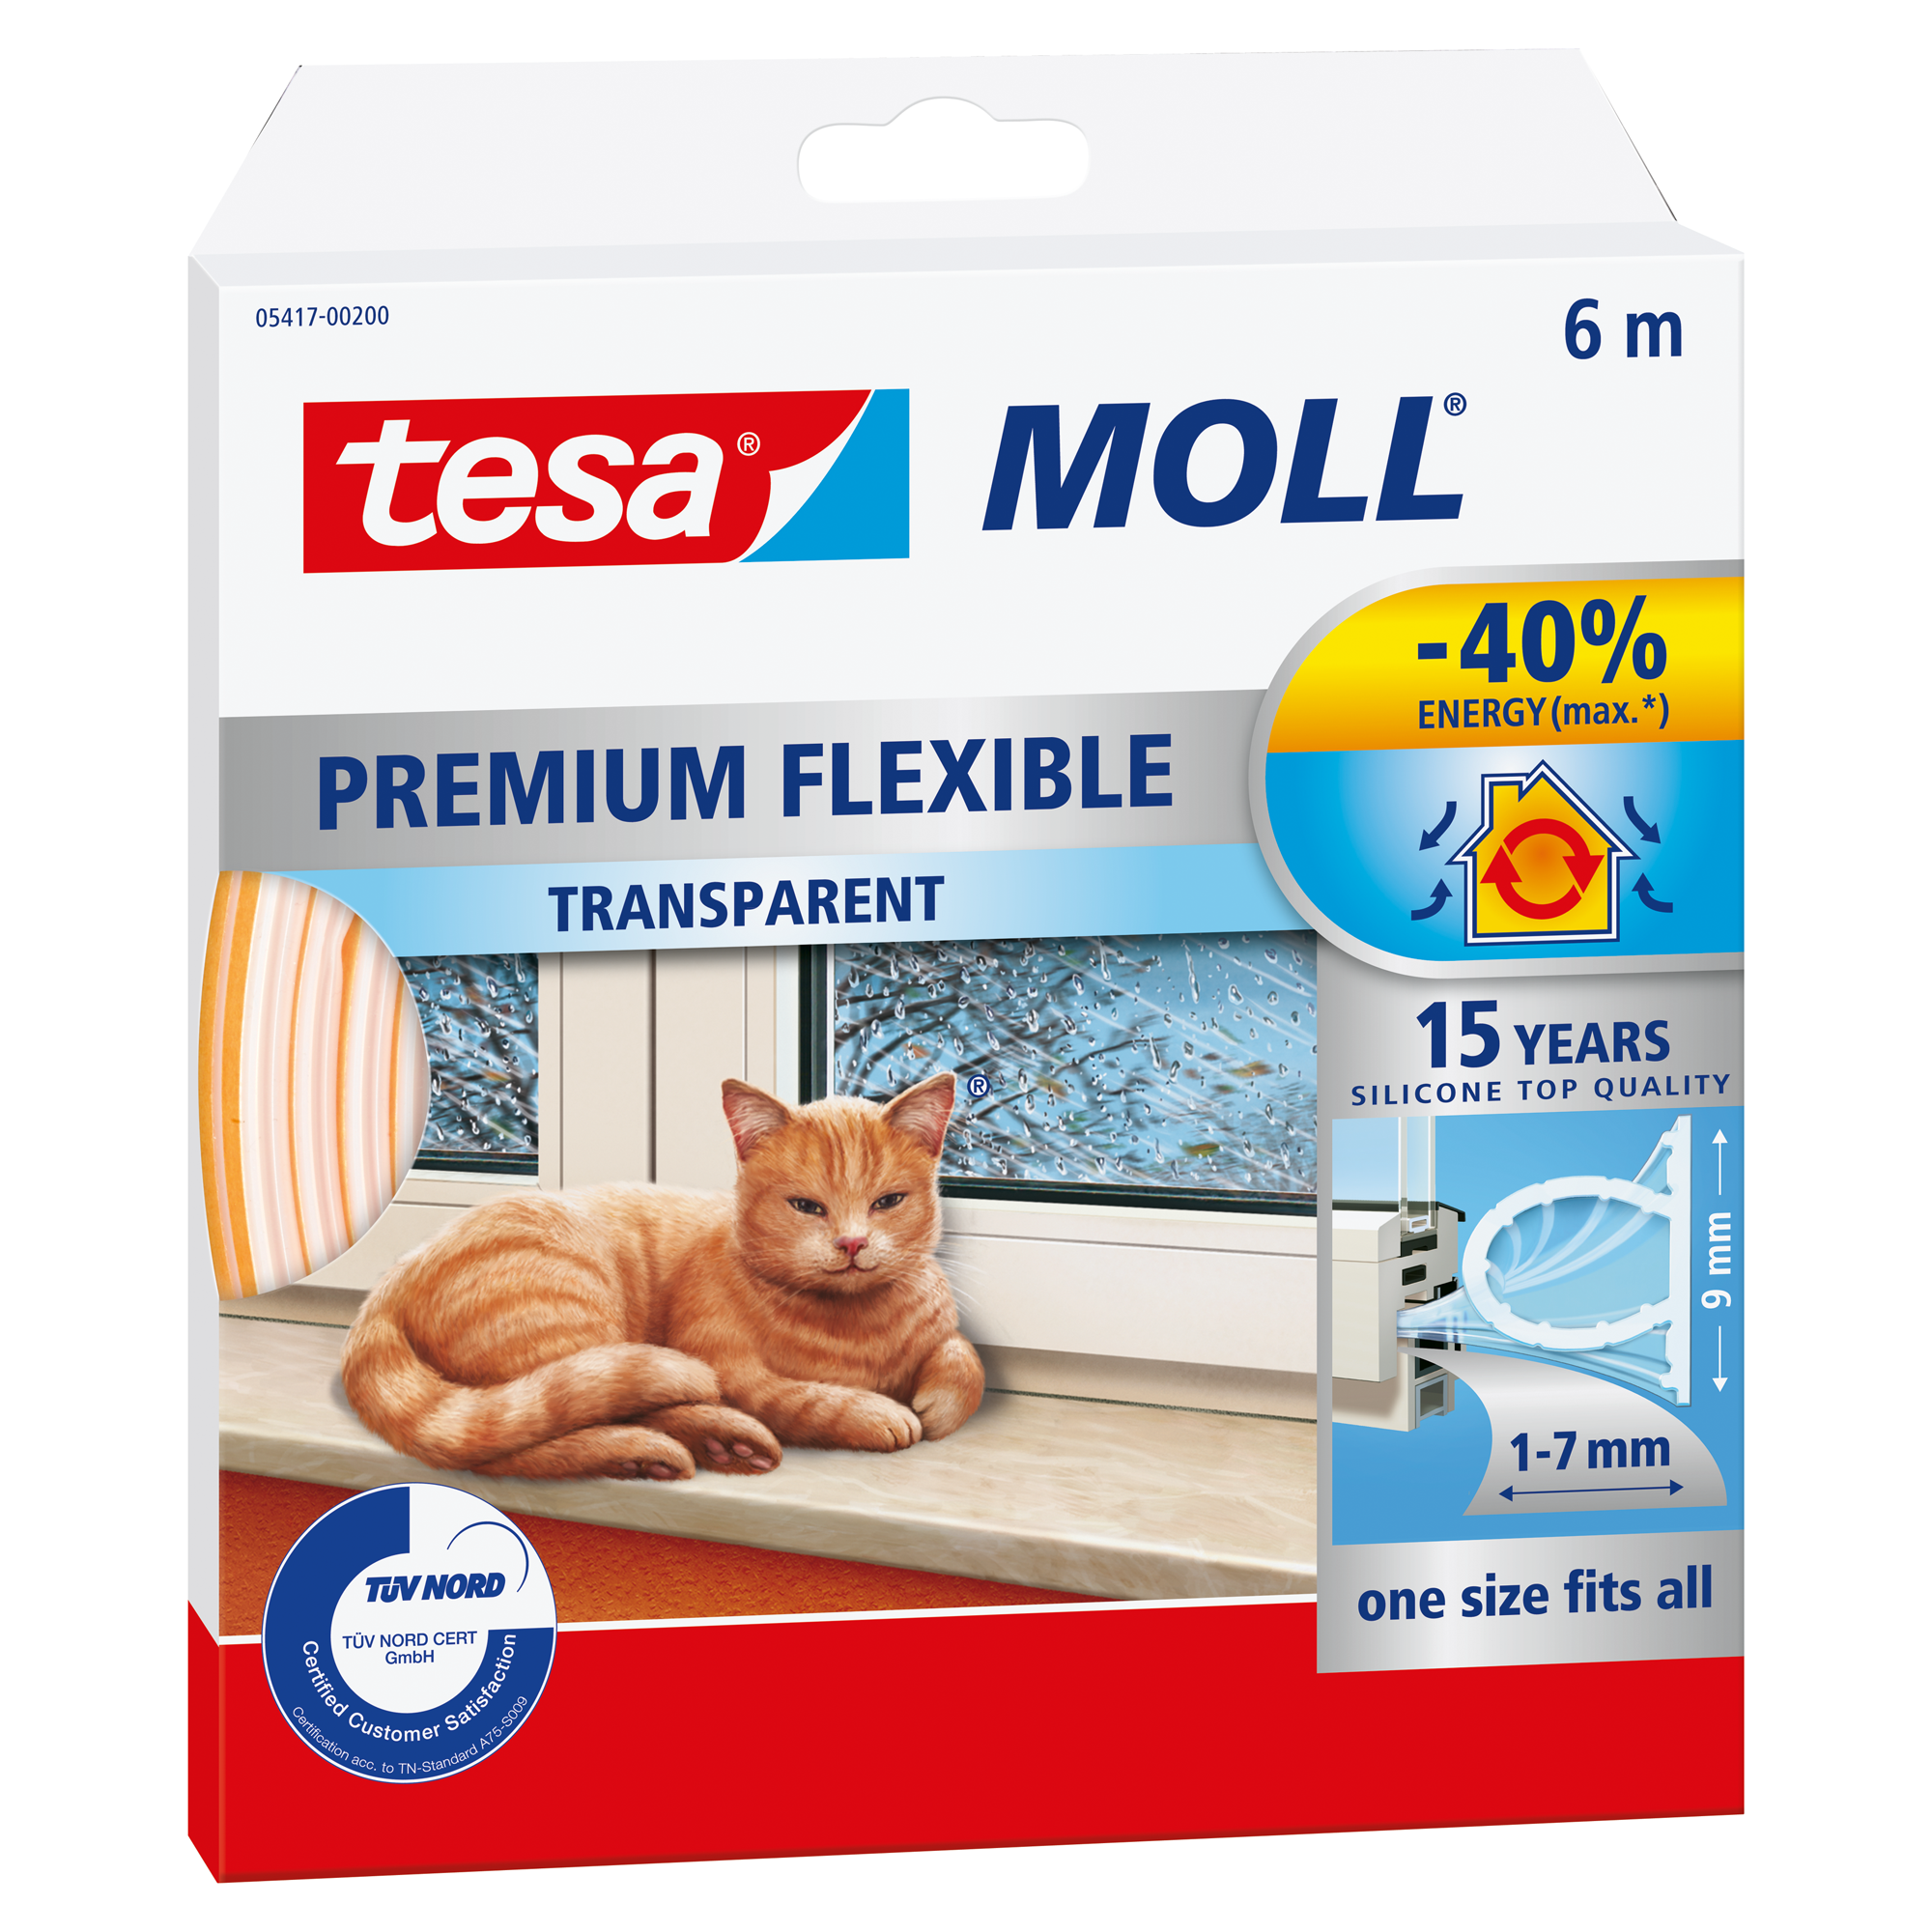 Tesa Silikondichtung 'tesamoll® Premium Flexible' 0,7 x 0,9 x 600 cm + product picture